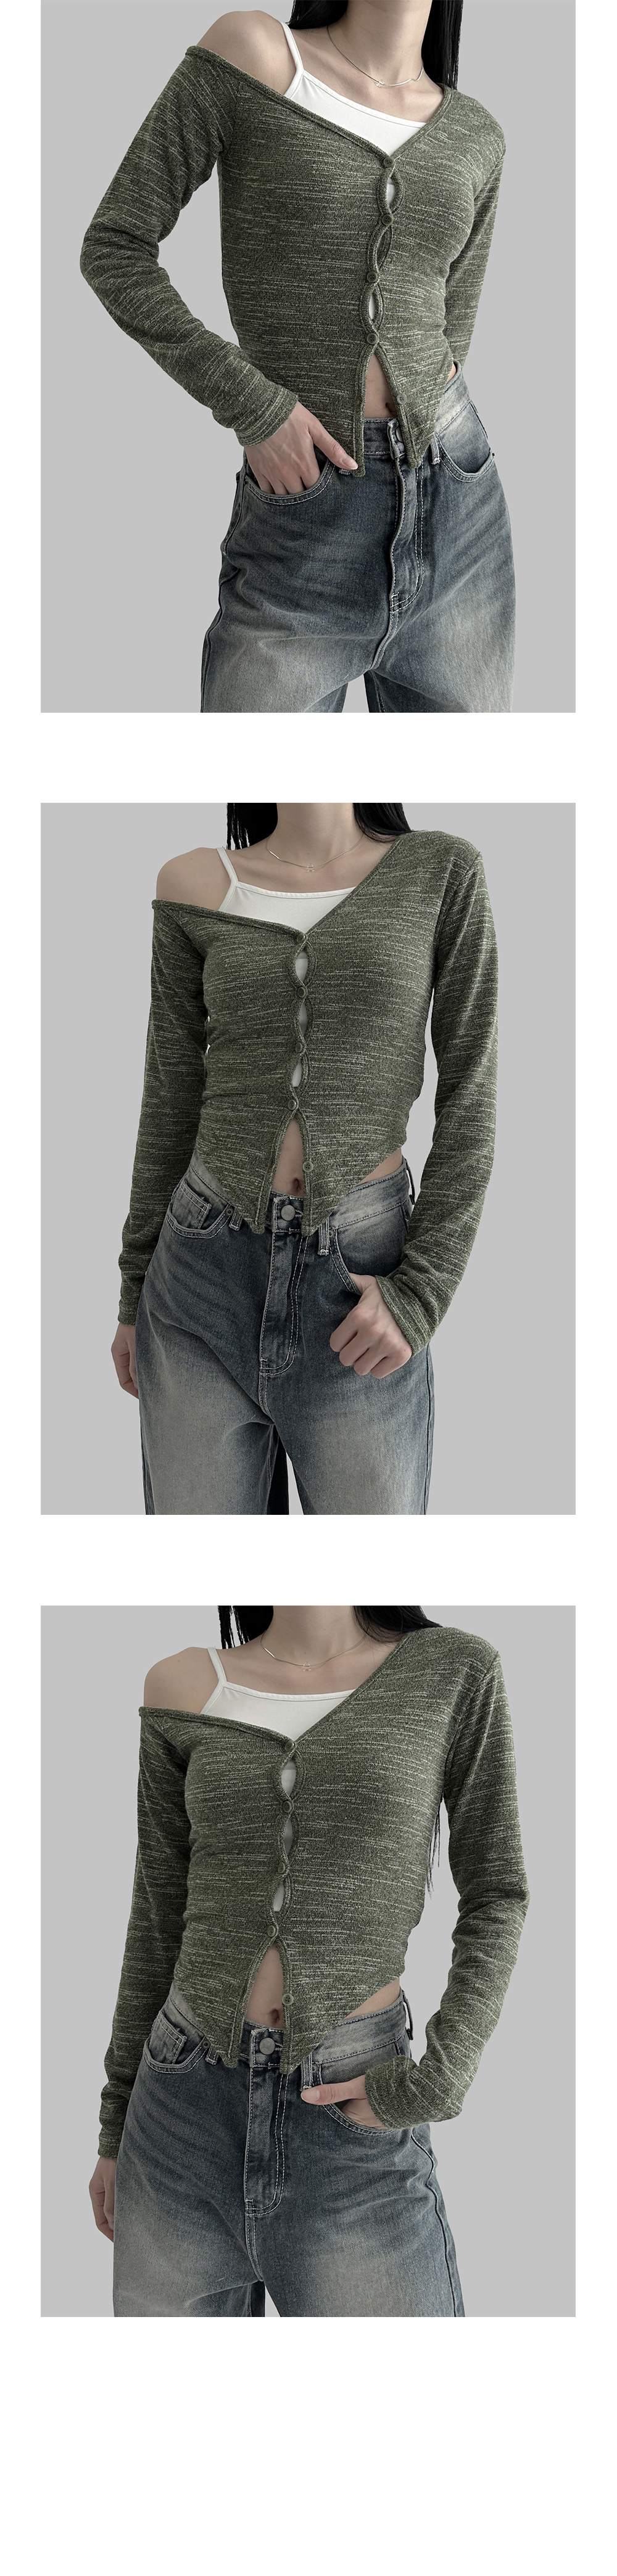 suspenders skirt/pants grey color image-S1L13